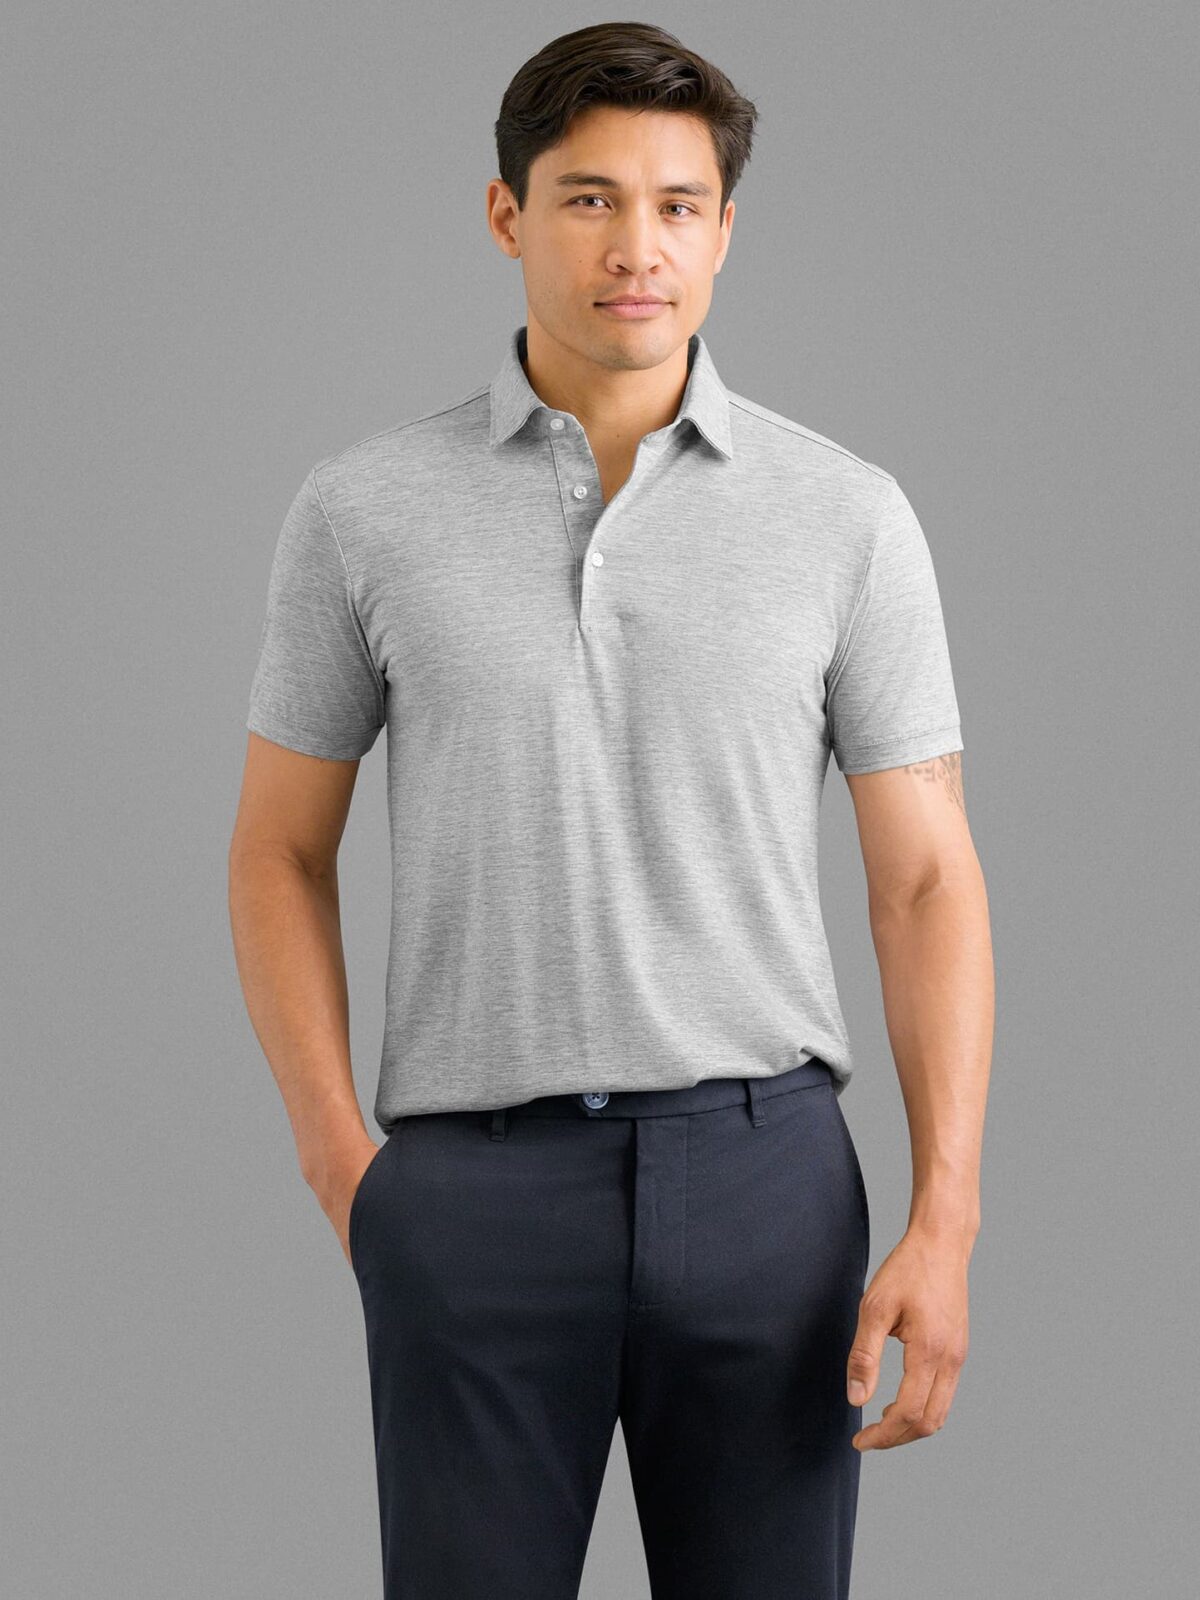 Classic Light Grey Pants Suitsforme.com